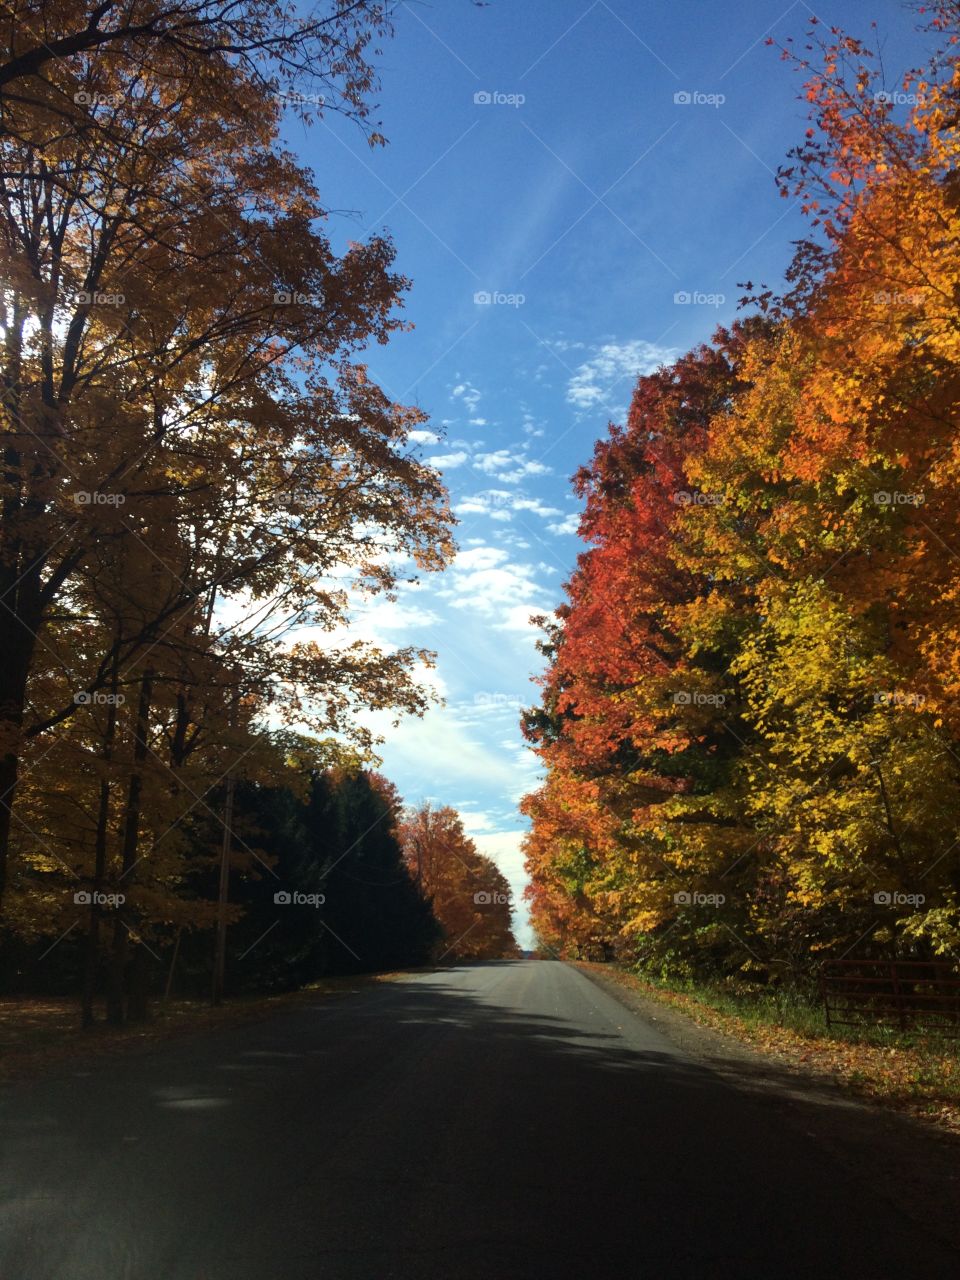 Fall landscape